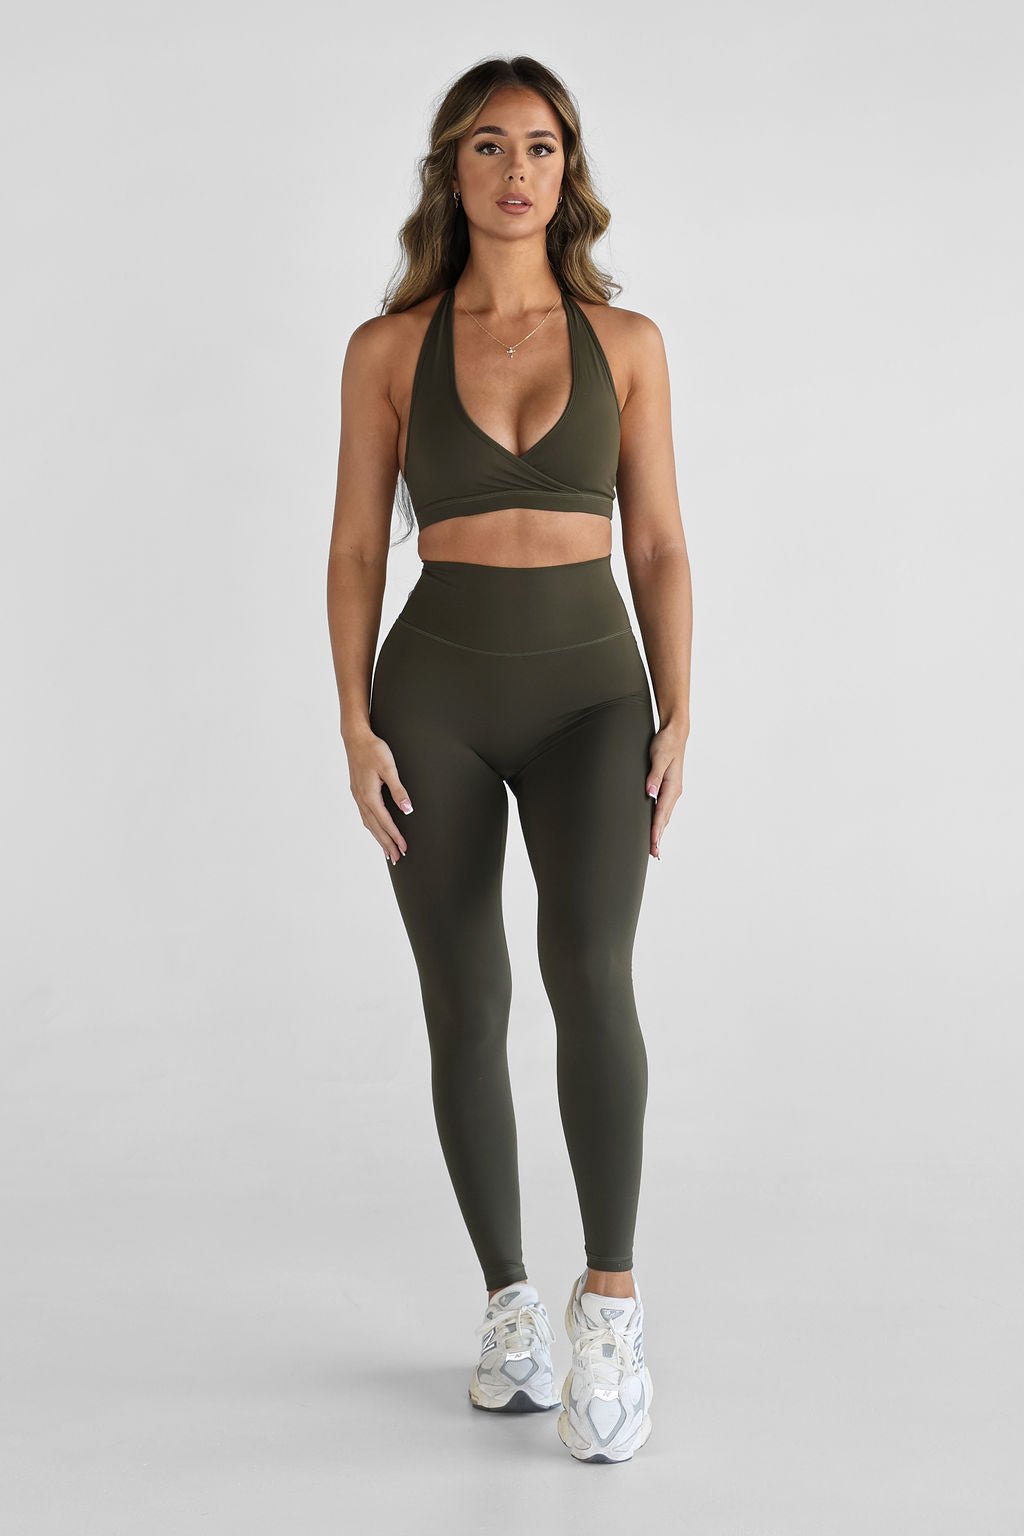 Gymshark Vital Seamless Leggings - Dark Green Marl Size S BRAND NEW,  Women's Fashion, Activewear on Carousell